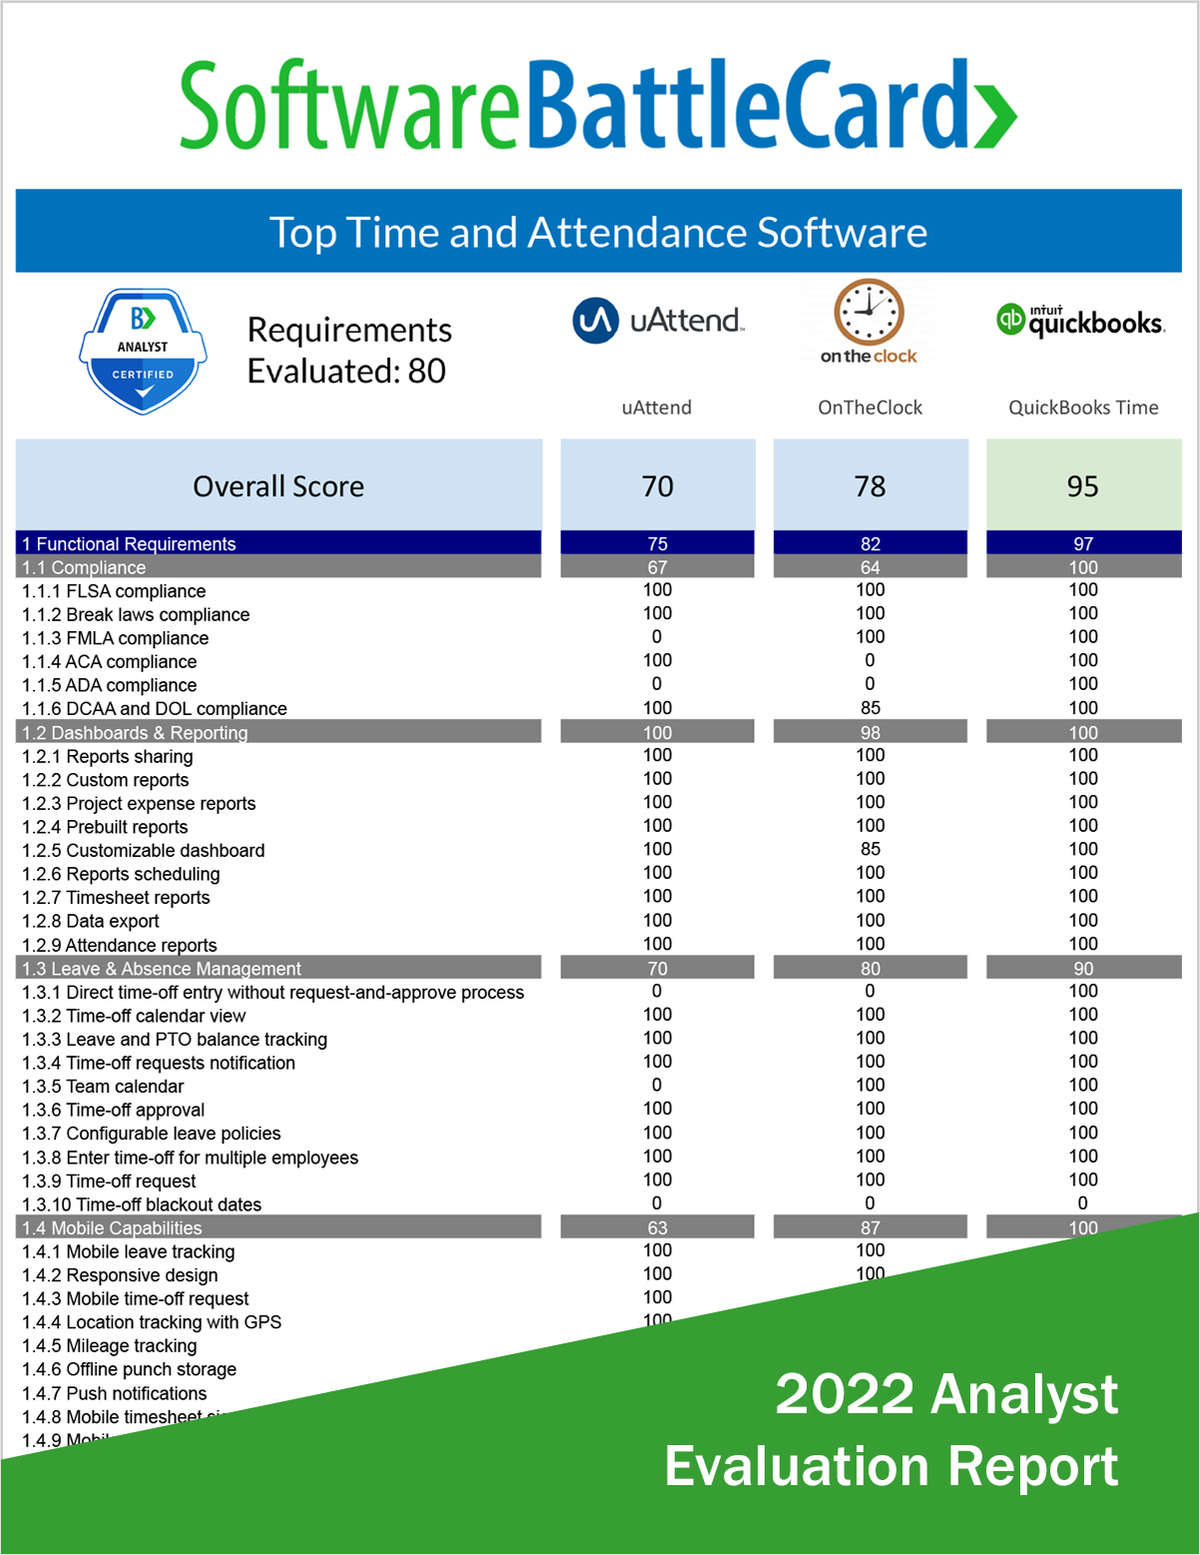 Top Time & Attendance Software BattleCard--UAttend vs. OnTheClock vs. QuickBooks Time